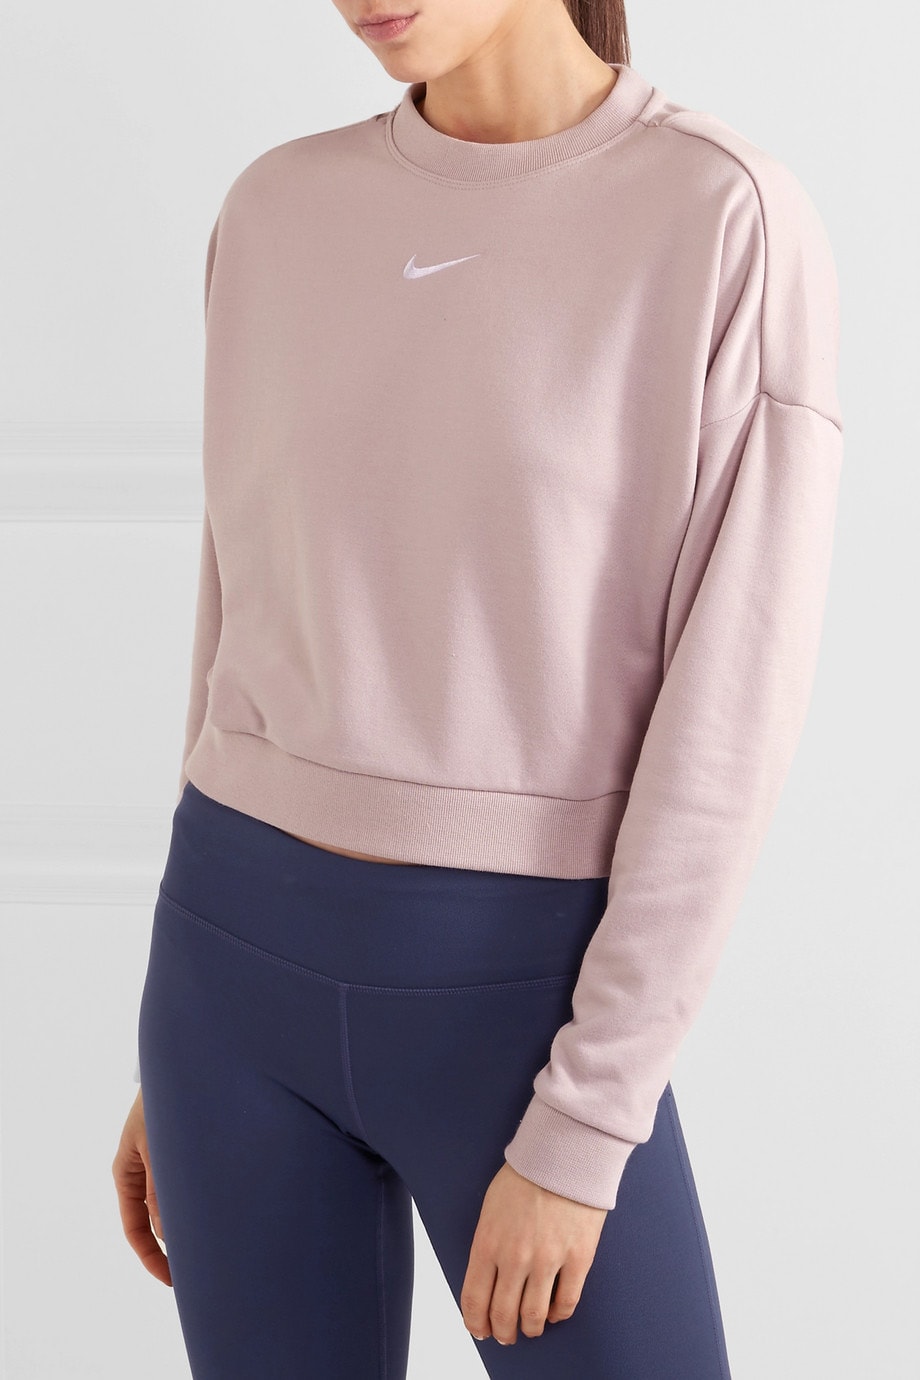 paciente pueblo Orgulloso Nike Unveils Pastel Pink Swoosh Logo Sweatshirt | Hypebae